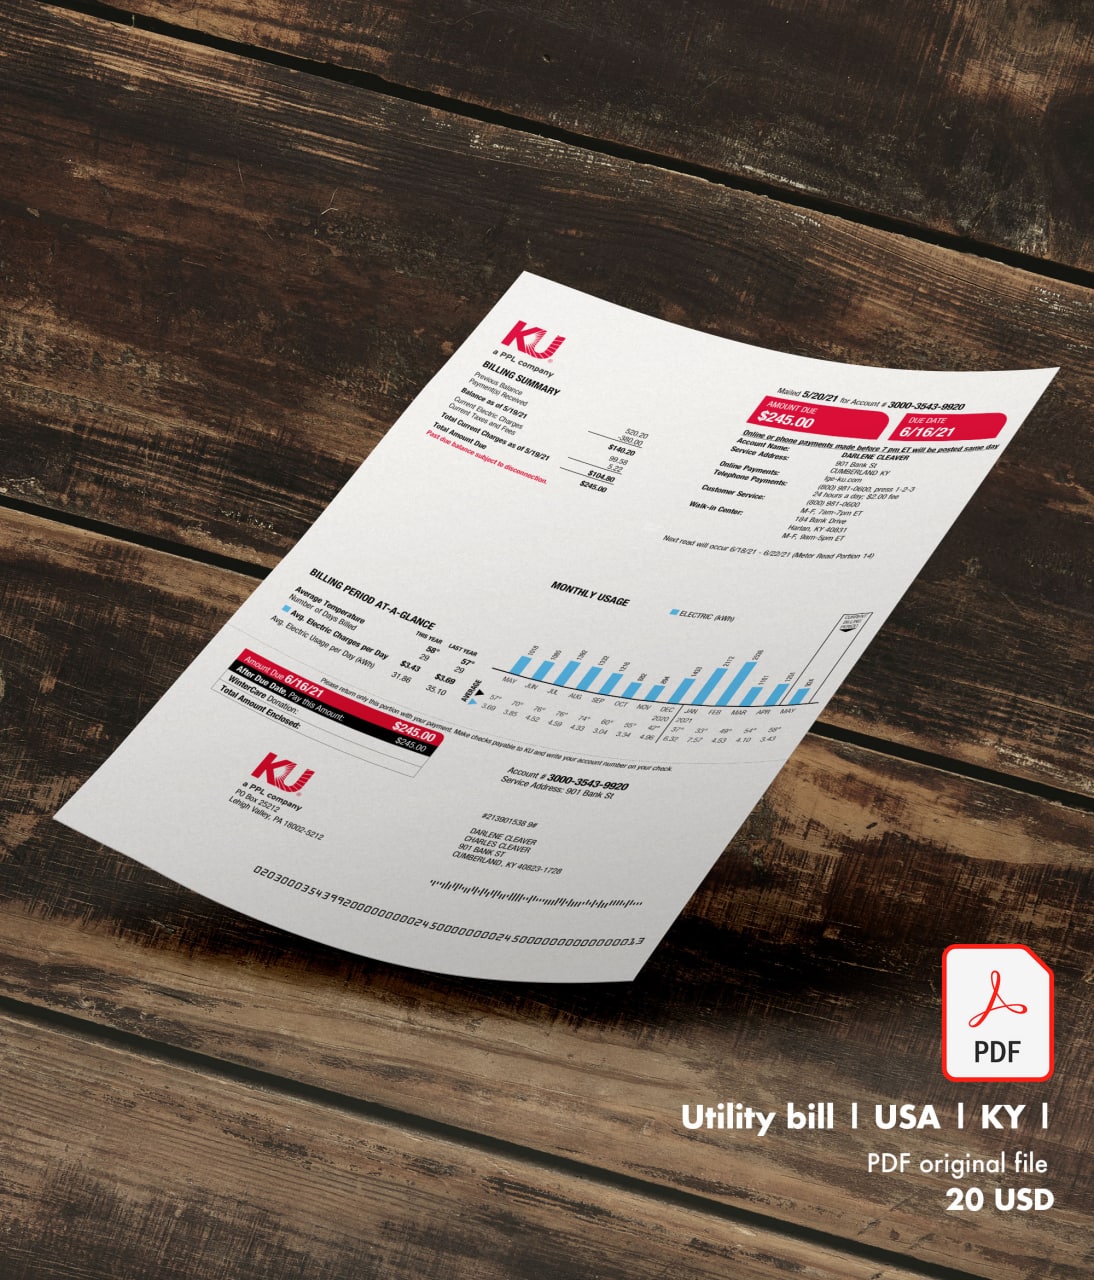 Utility bill | LGE | USA | KY1